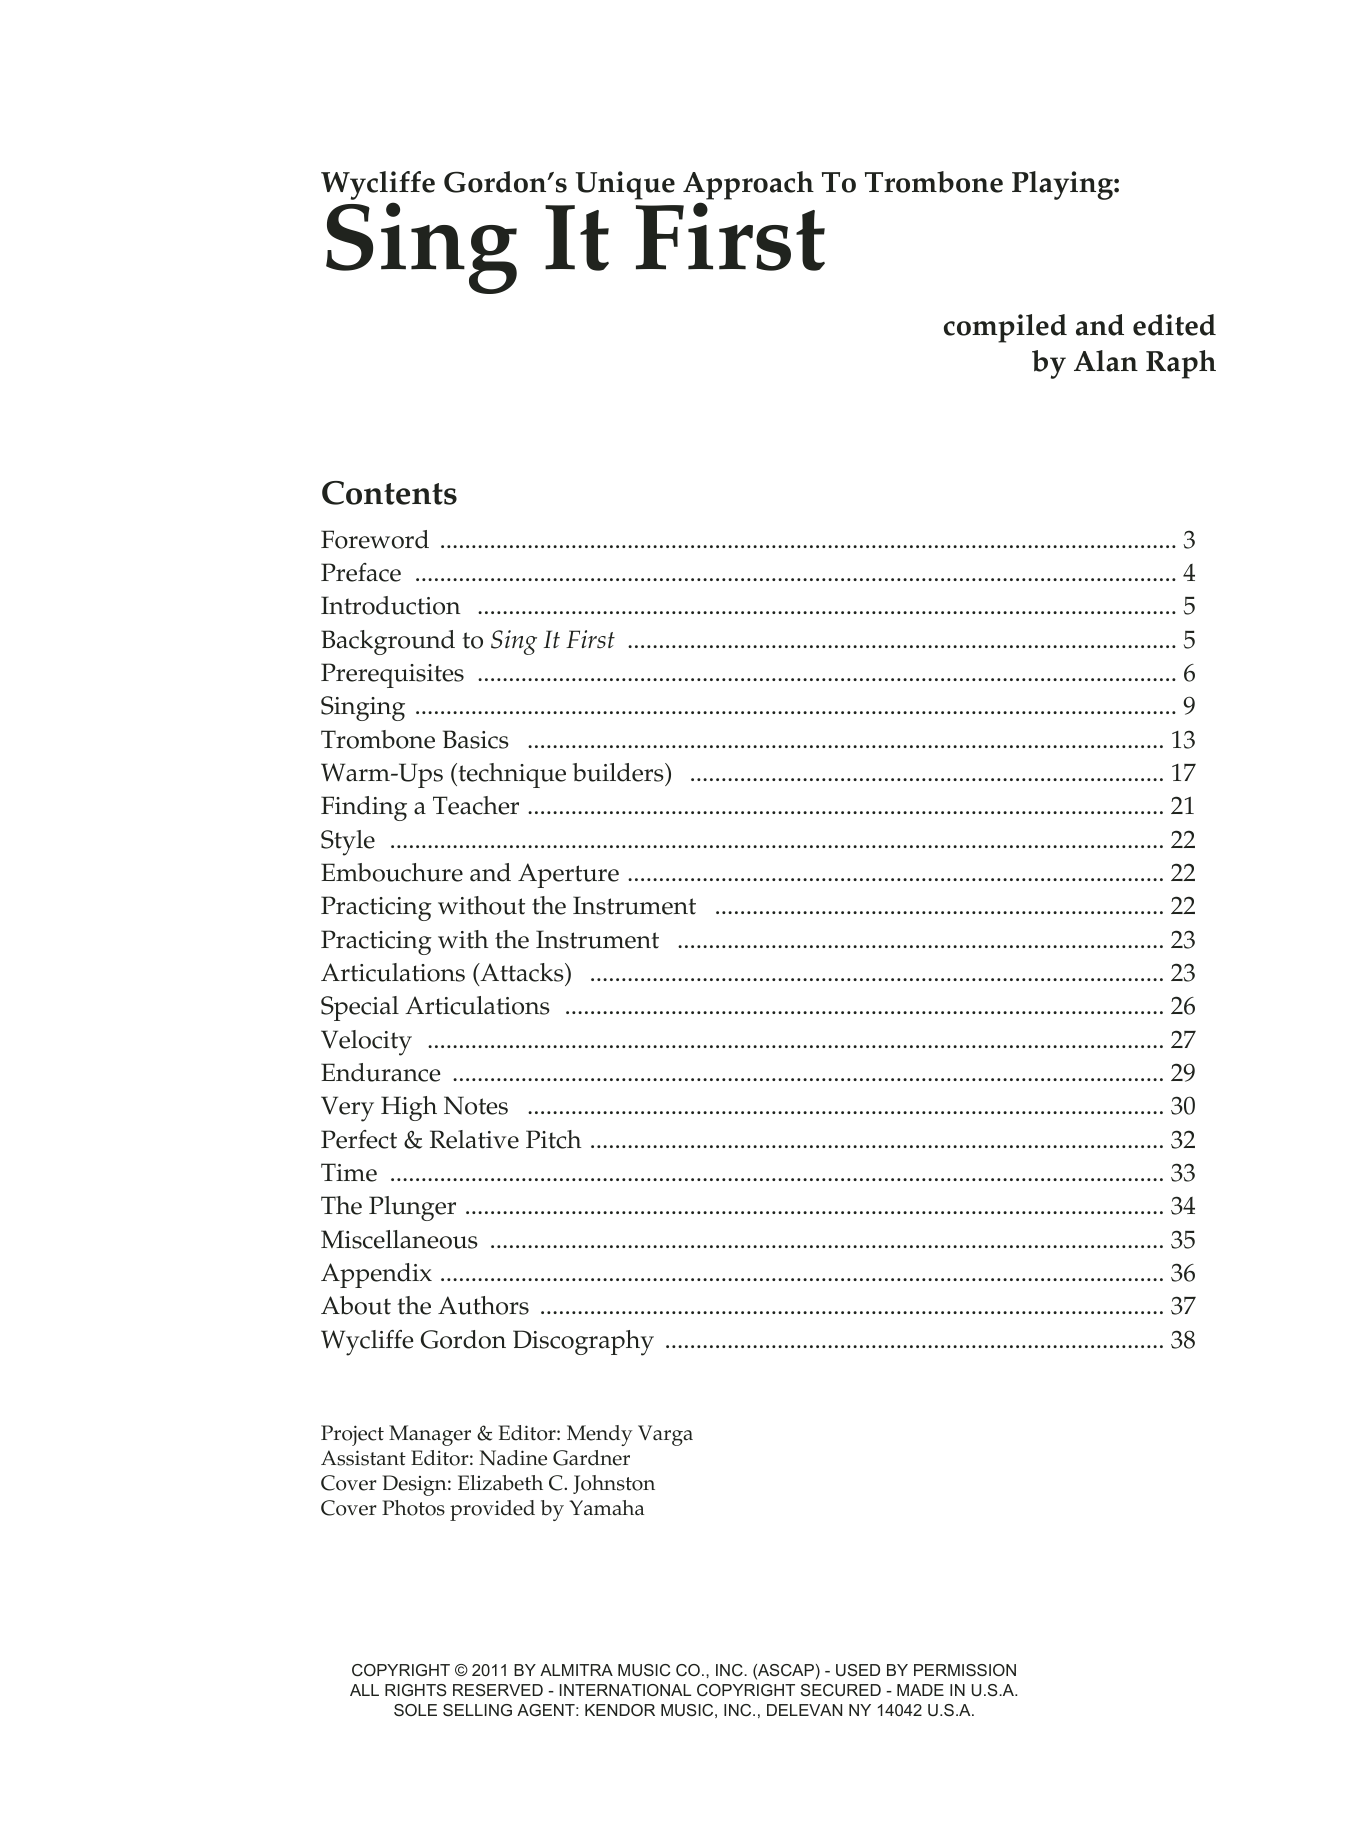 Download Wycliffe Gordon Sing It First (Wycliffe Gordon's Unique Sheet Music